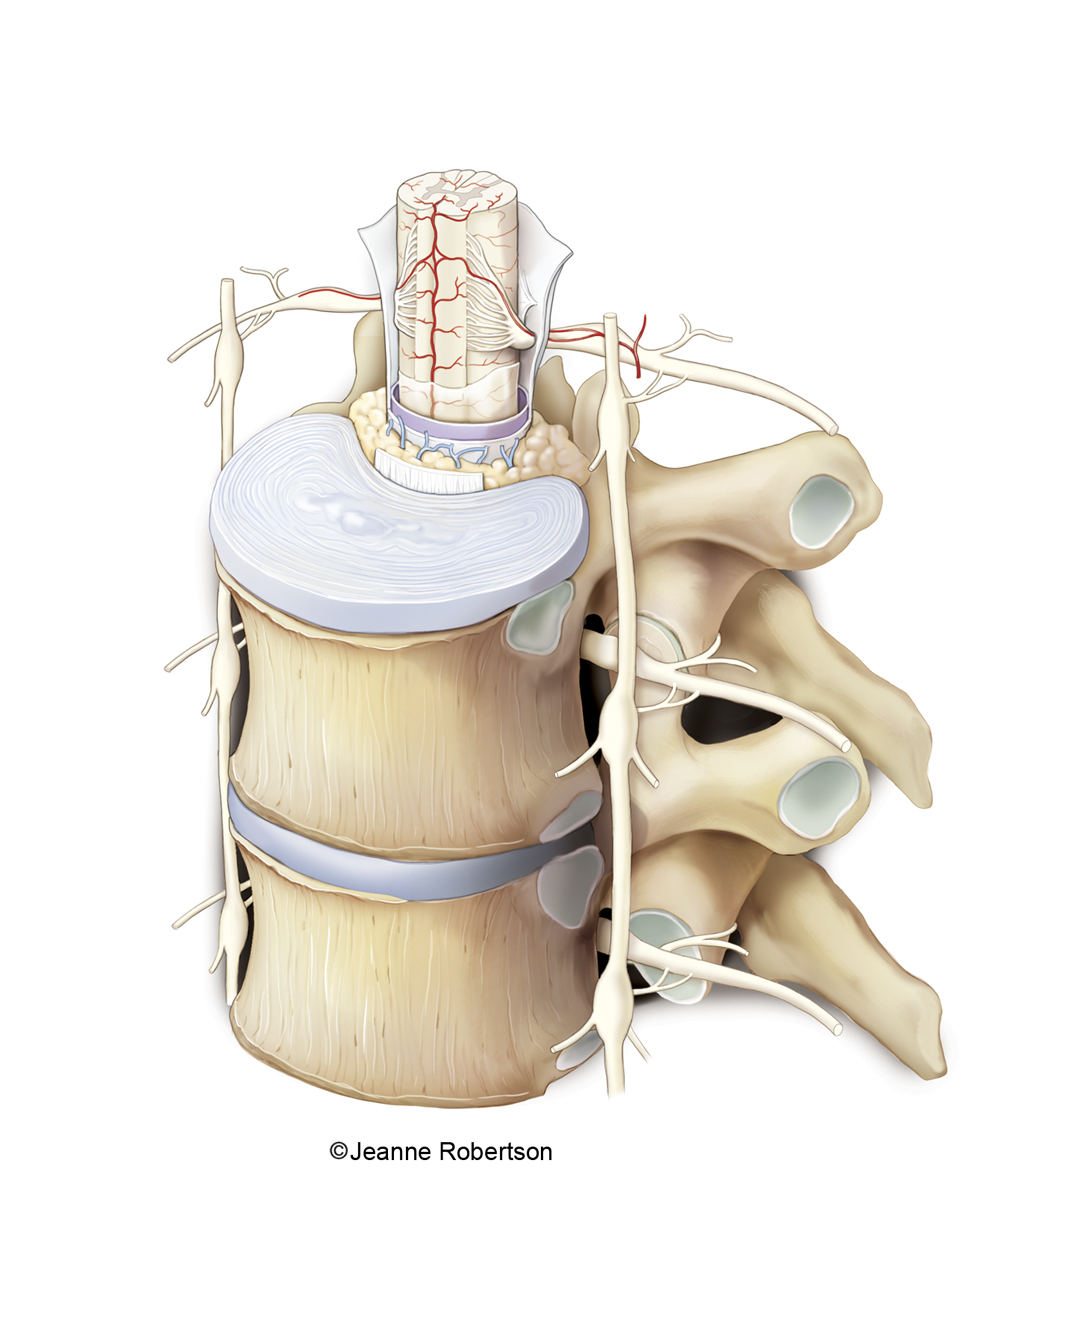 spinal cord.jpg